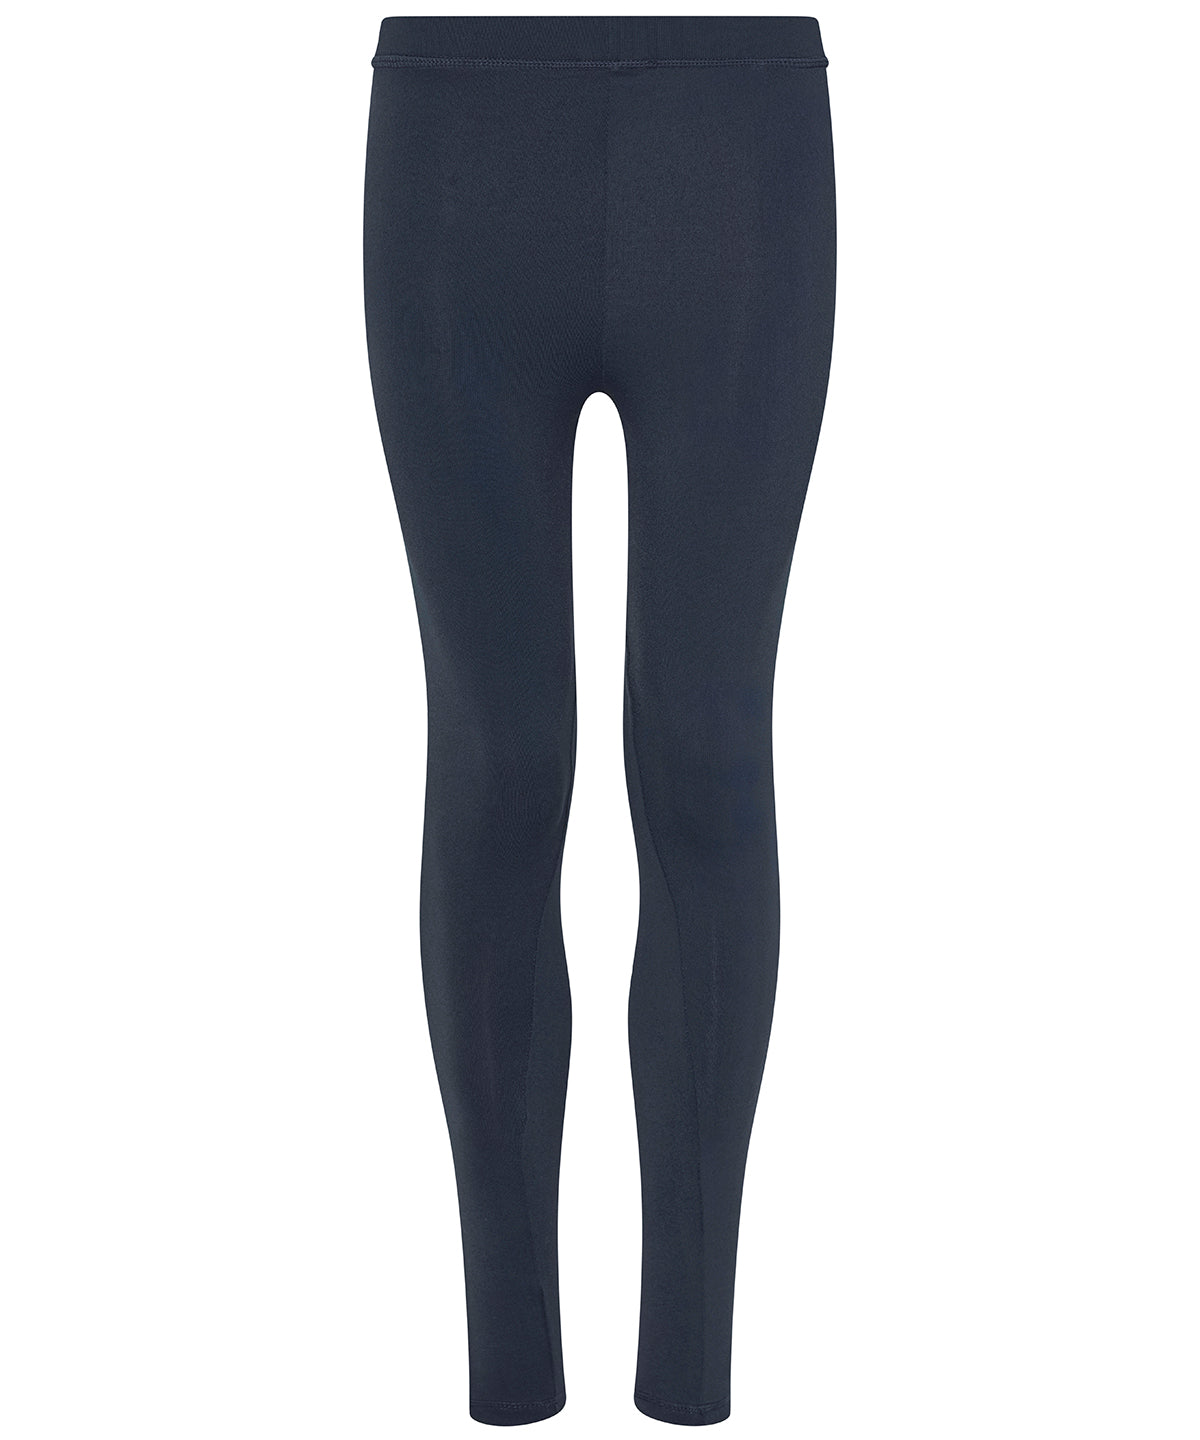 Personalised Leggings - Navy AWDis Just Cool Women's cool athletic pants